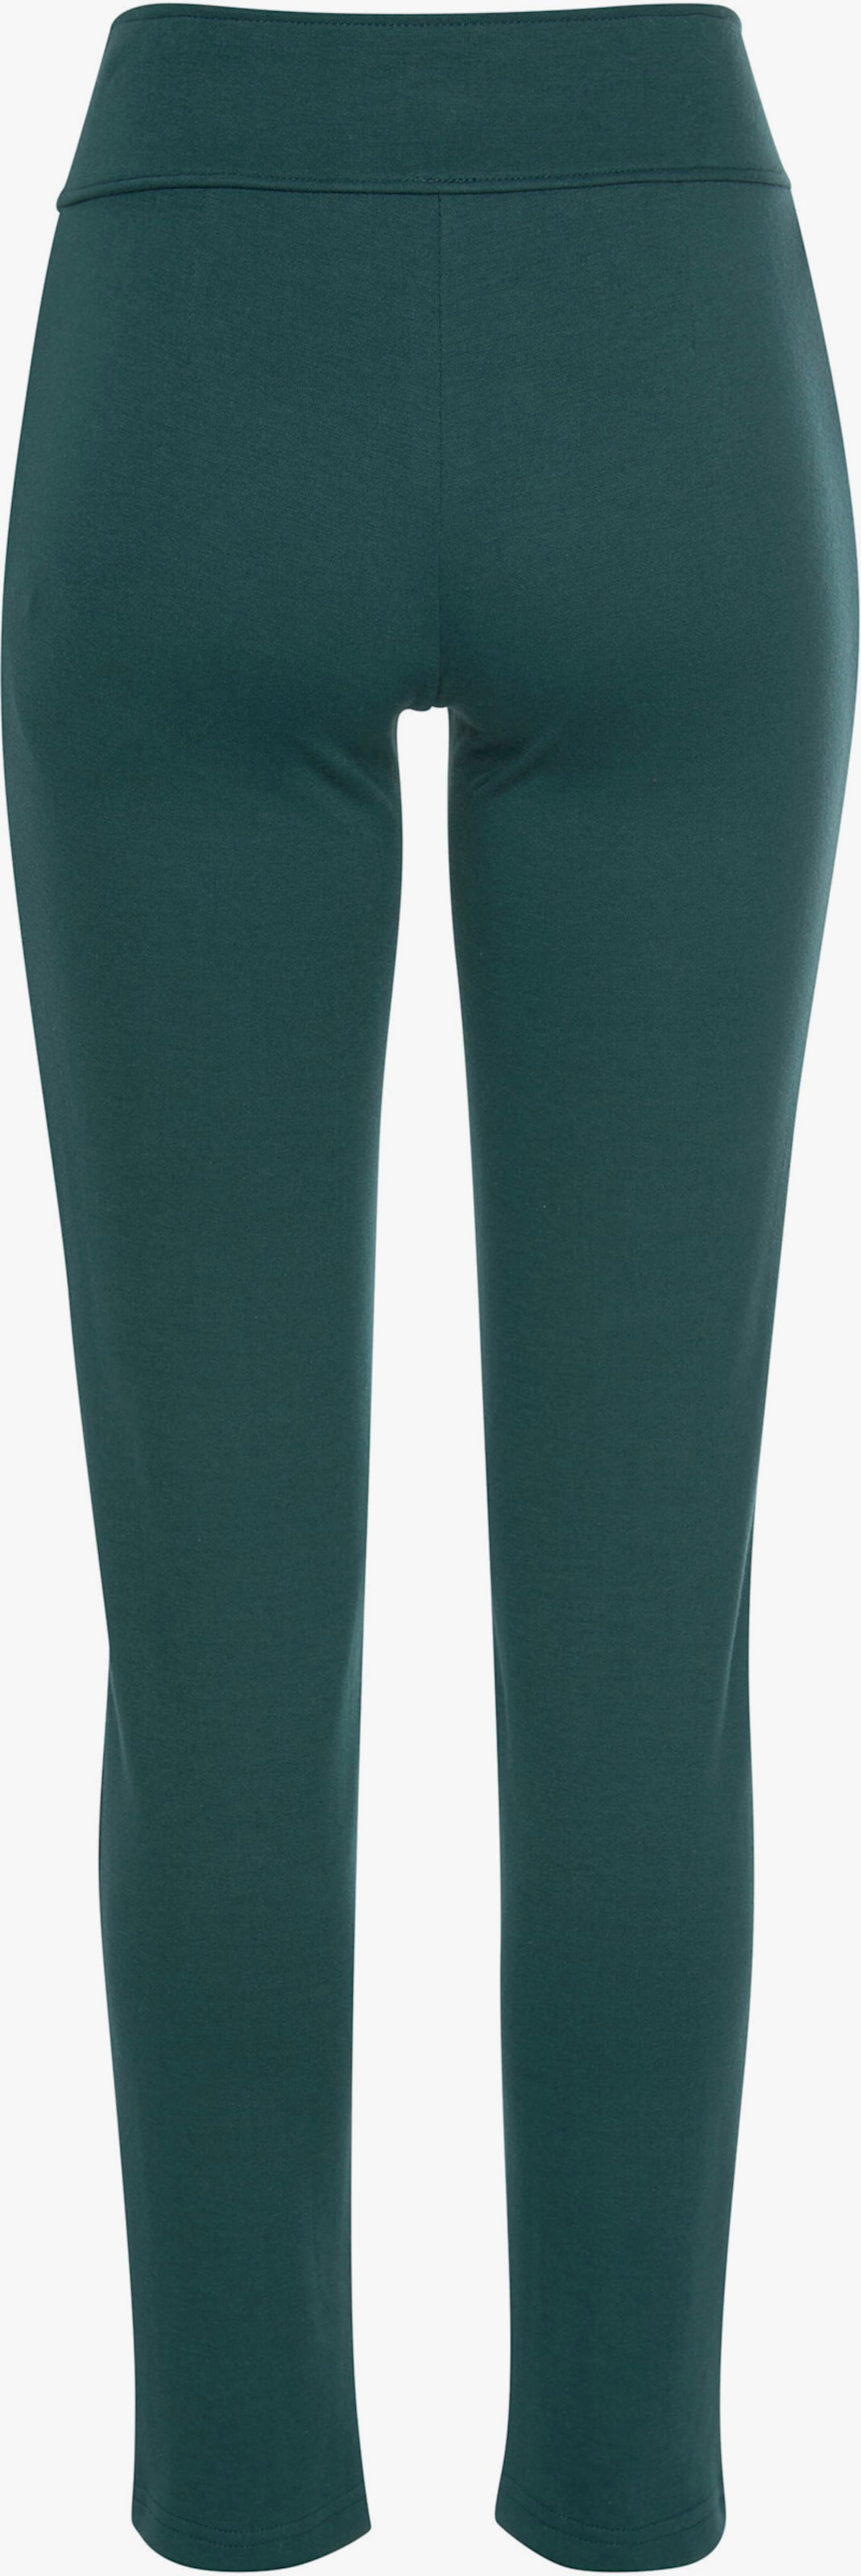 Pantalon molletonné - vert foncé